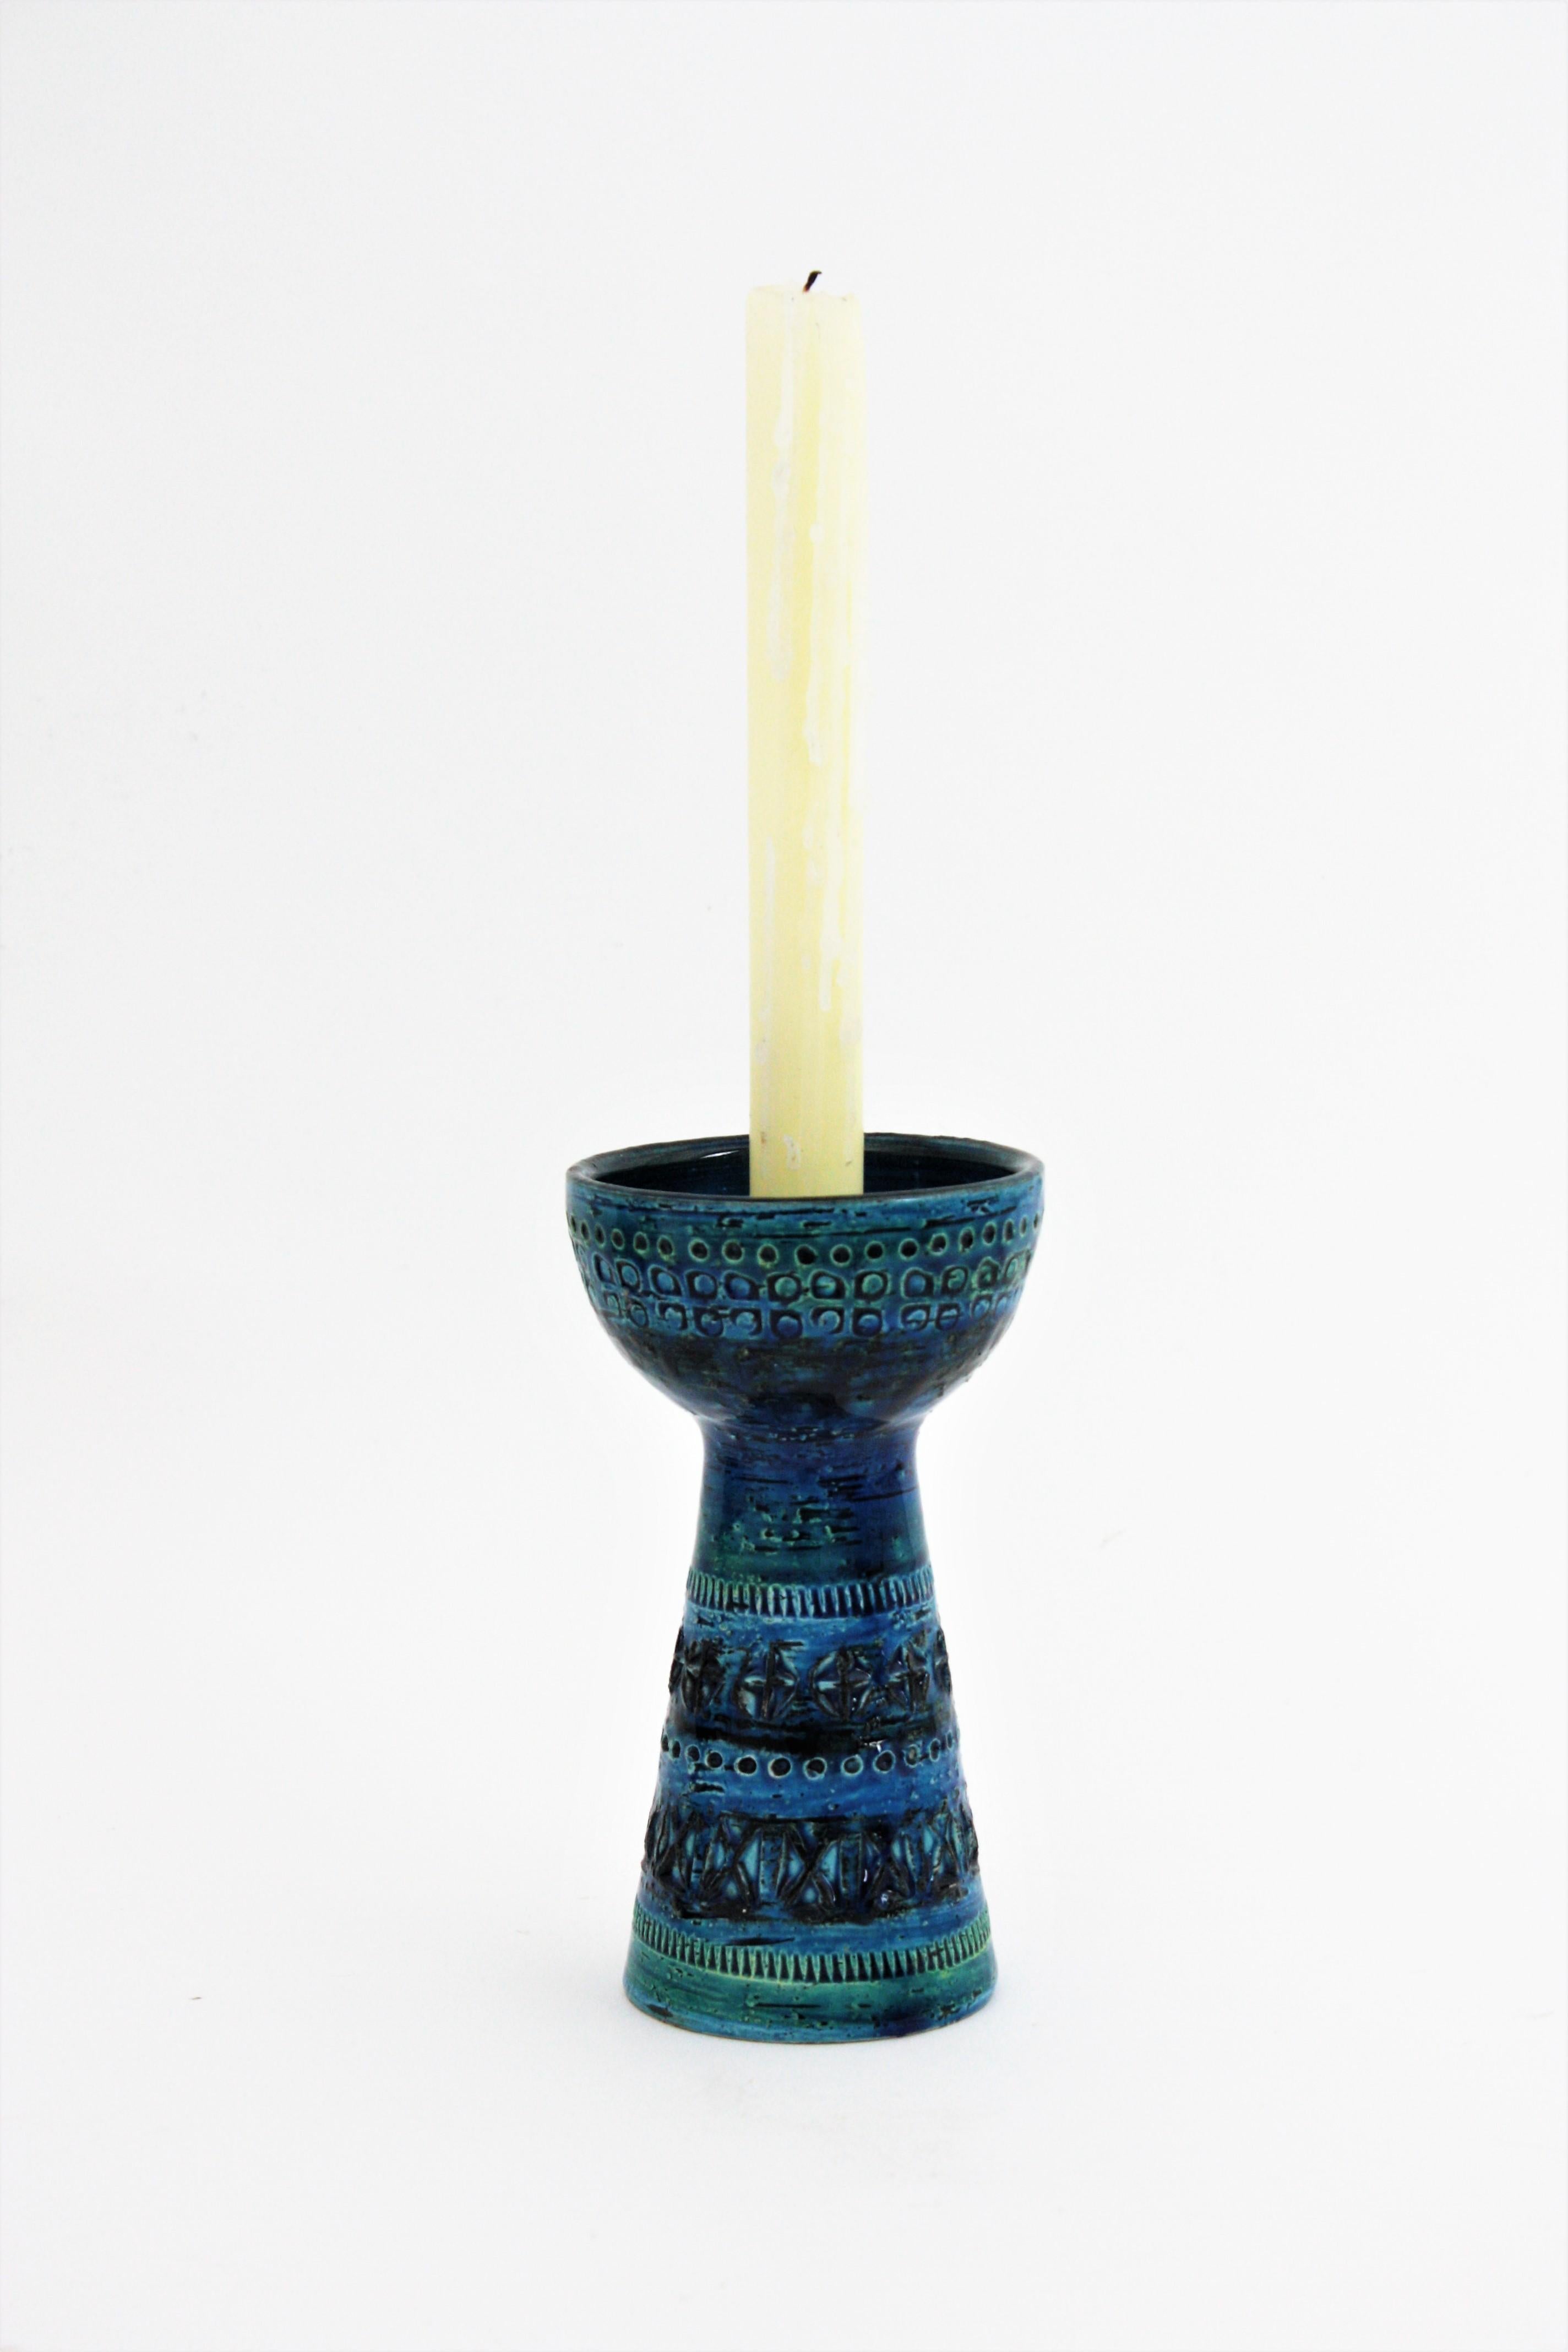 Bitossi Aldo Londi Rimini Blue Ceramic Set of Vase, Ashtray and Candleholder For Sale 1